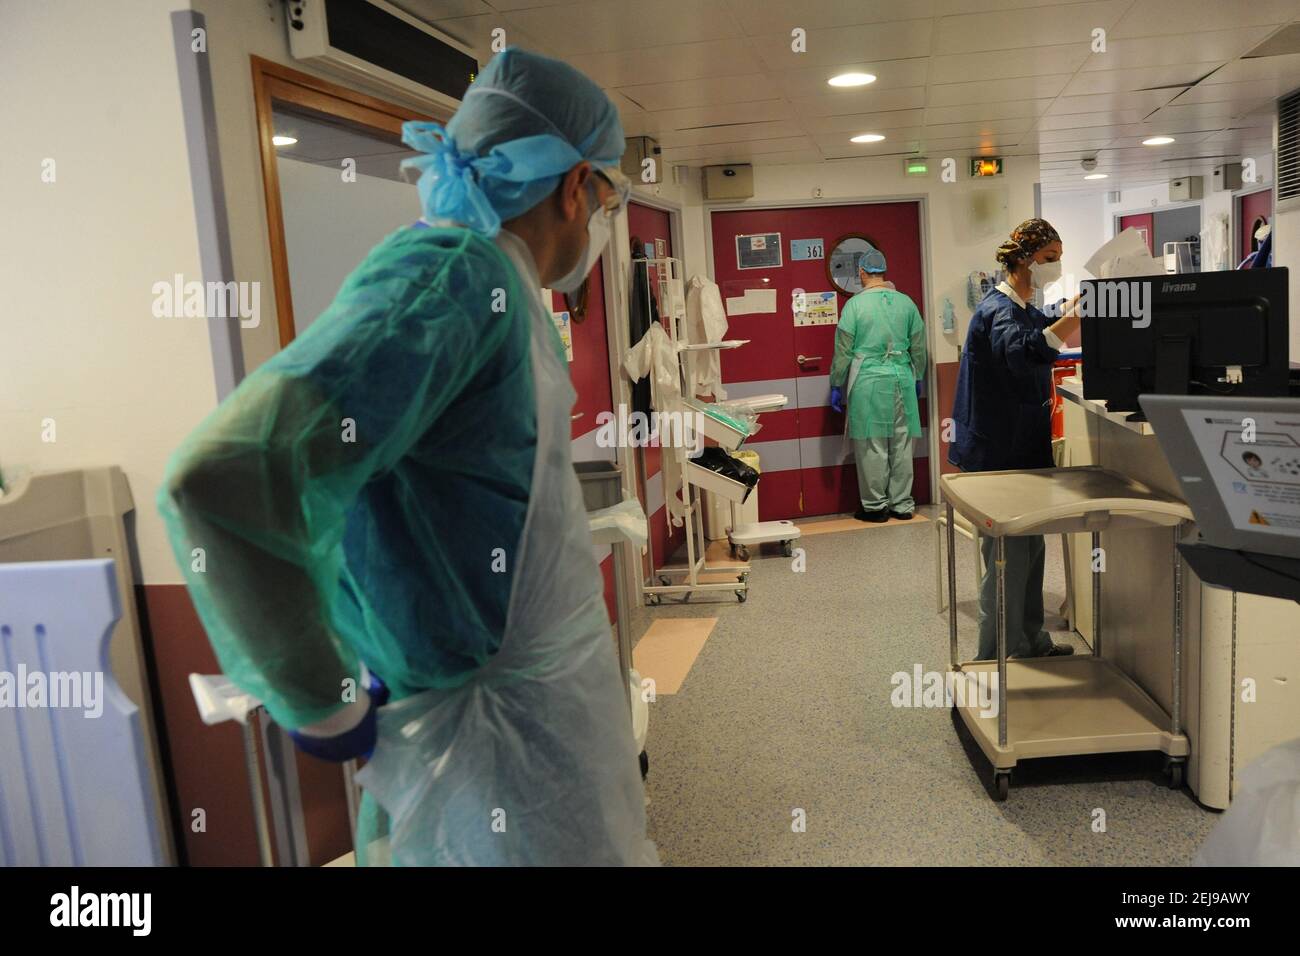 Medical intensive care unit covid-19 Stock Photo